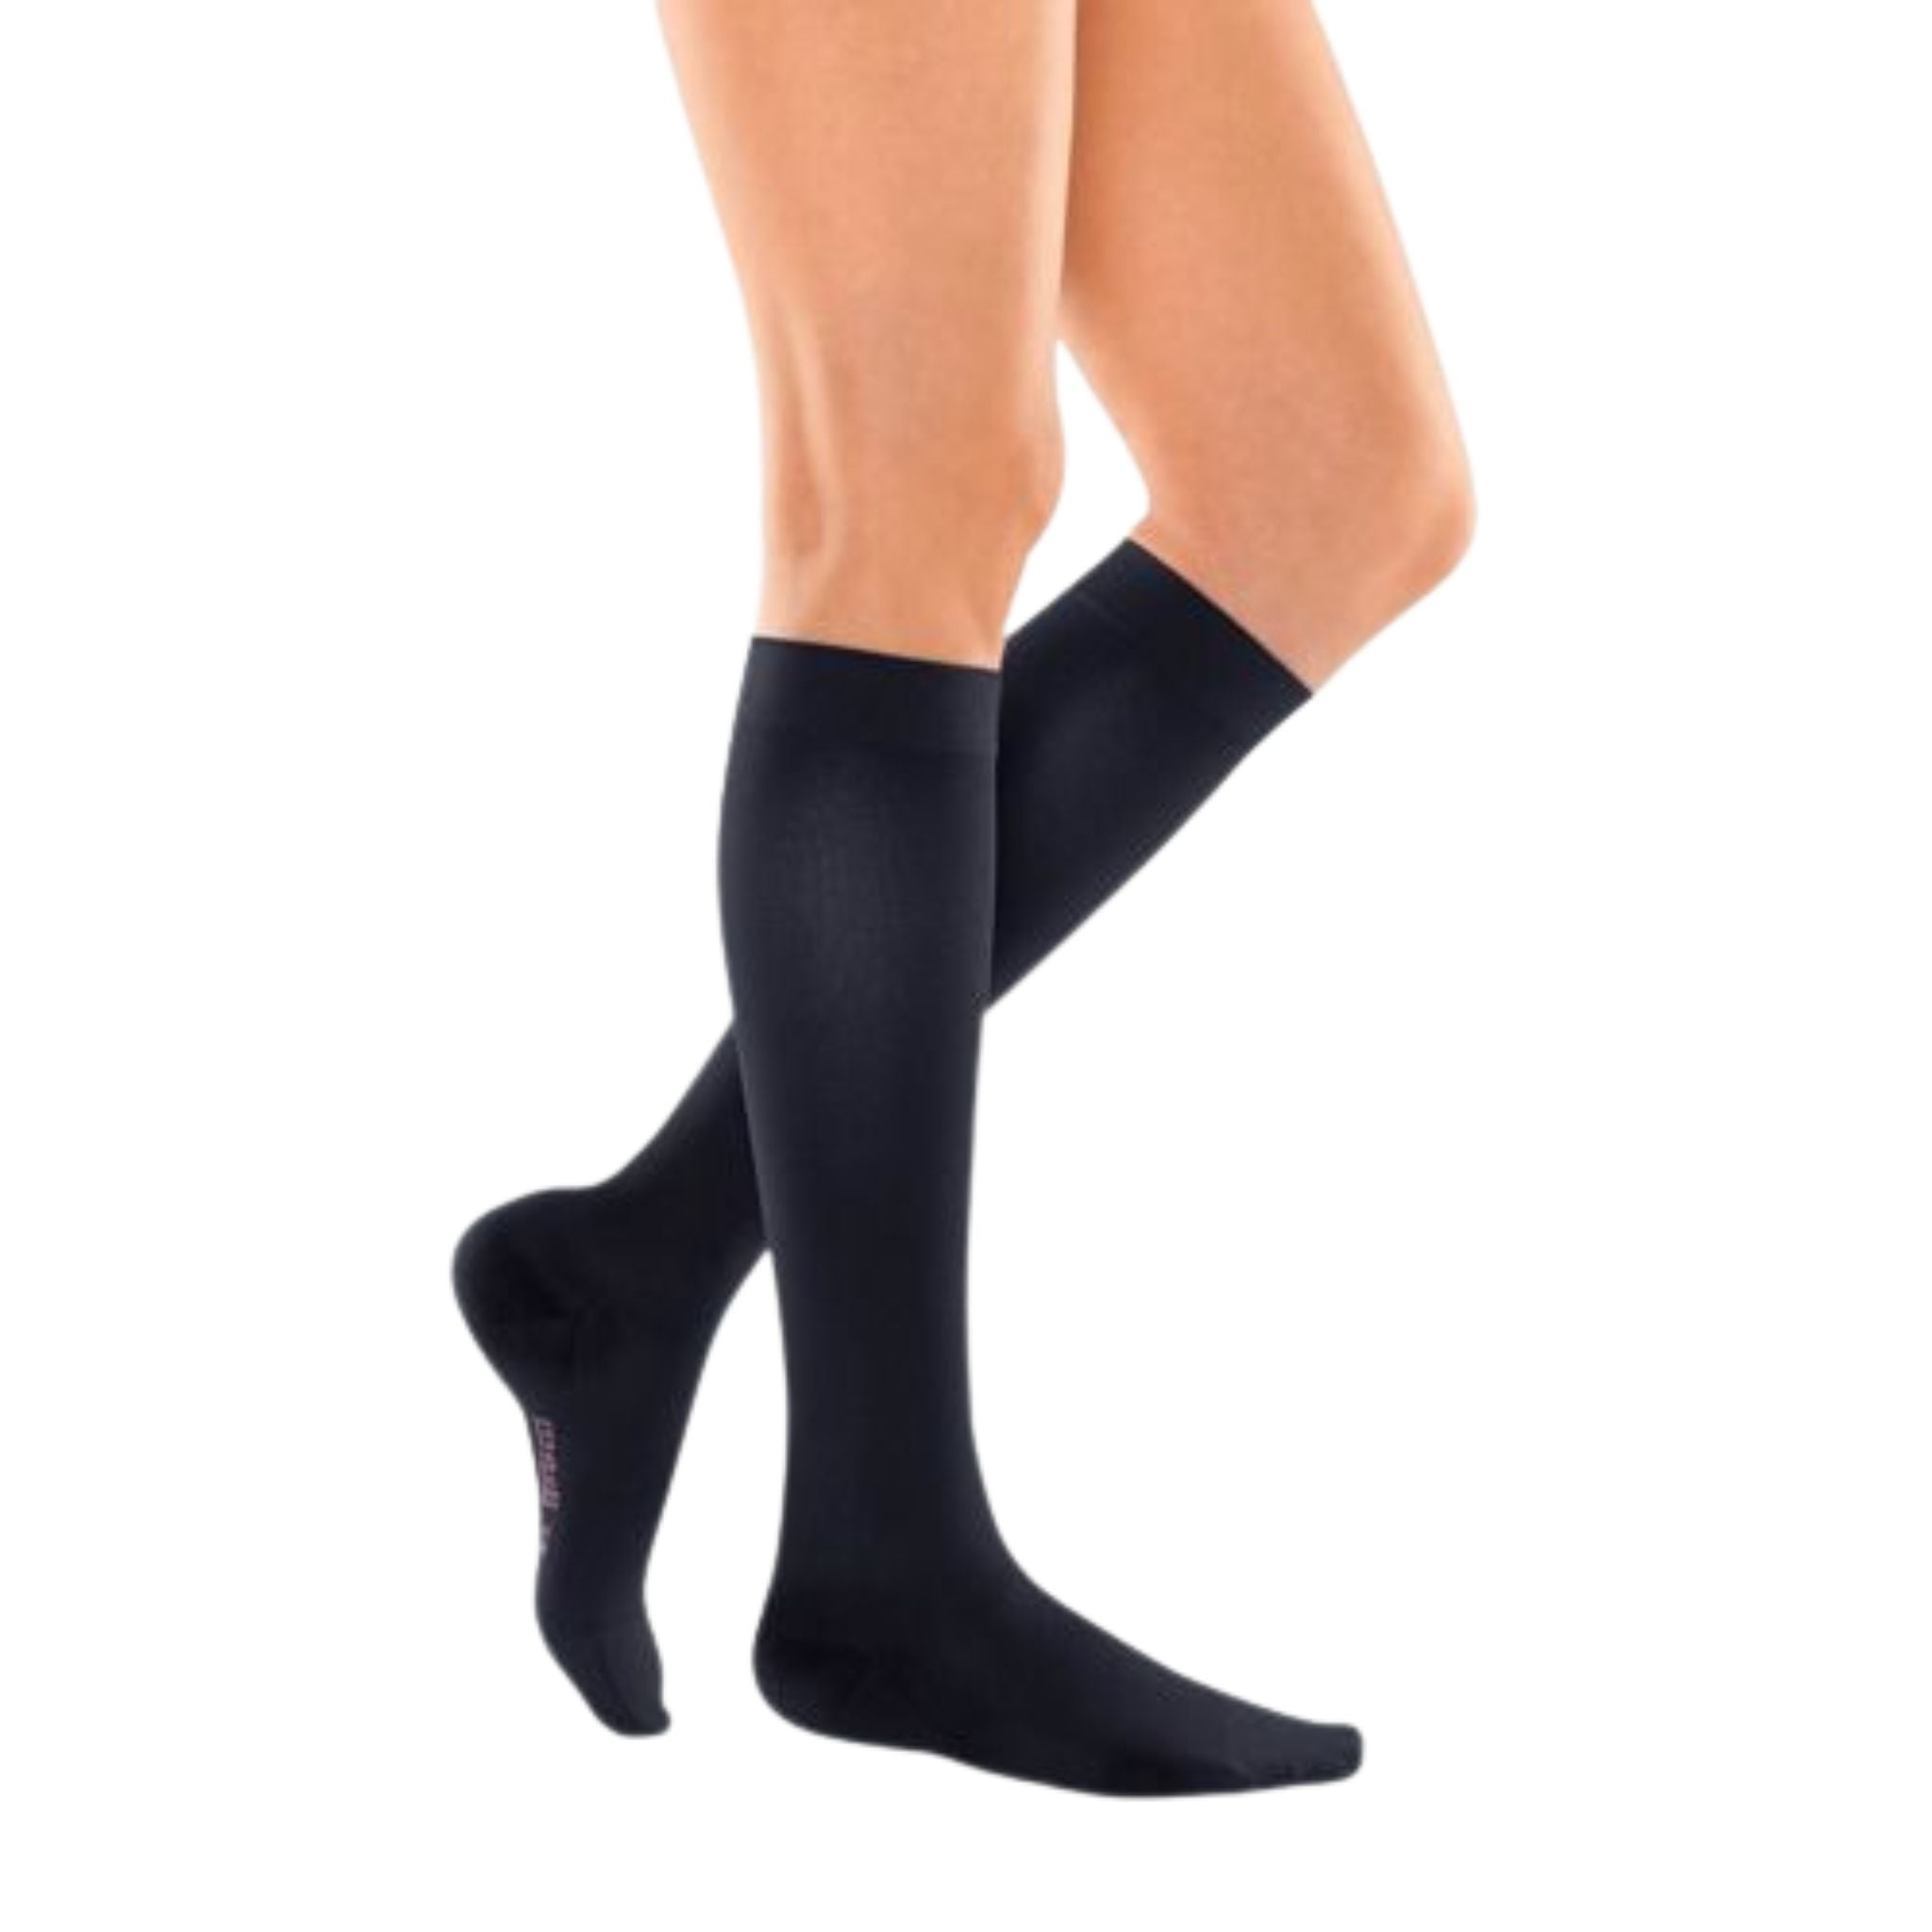 Travel Socks  Below Knee  medi travel® women